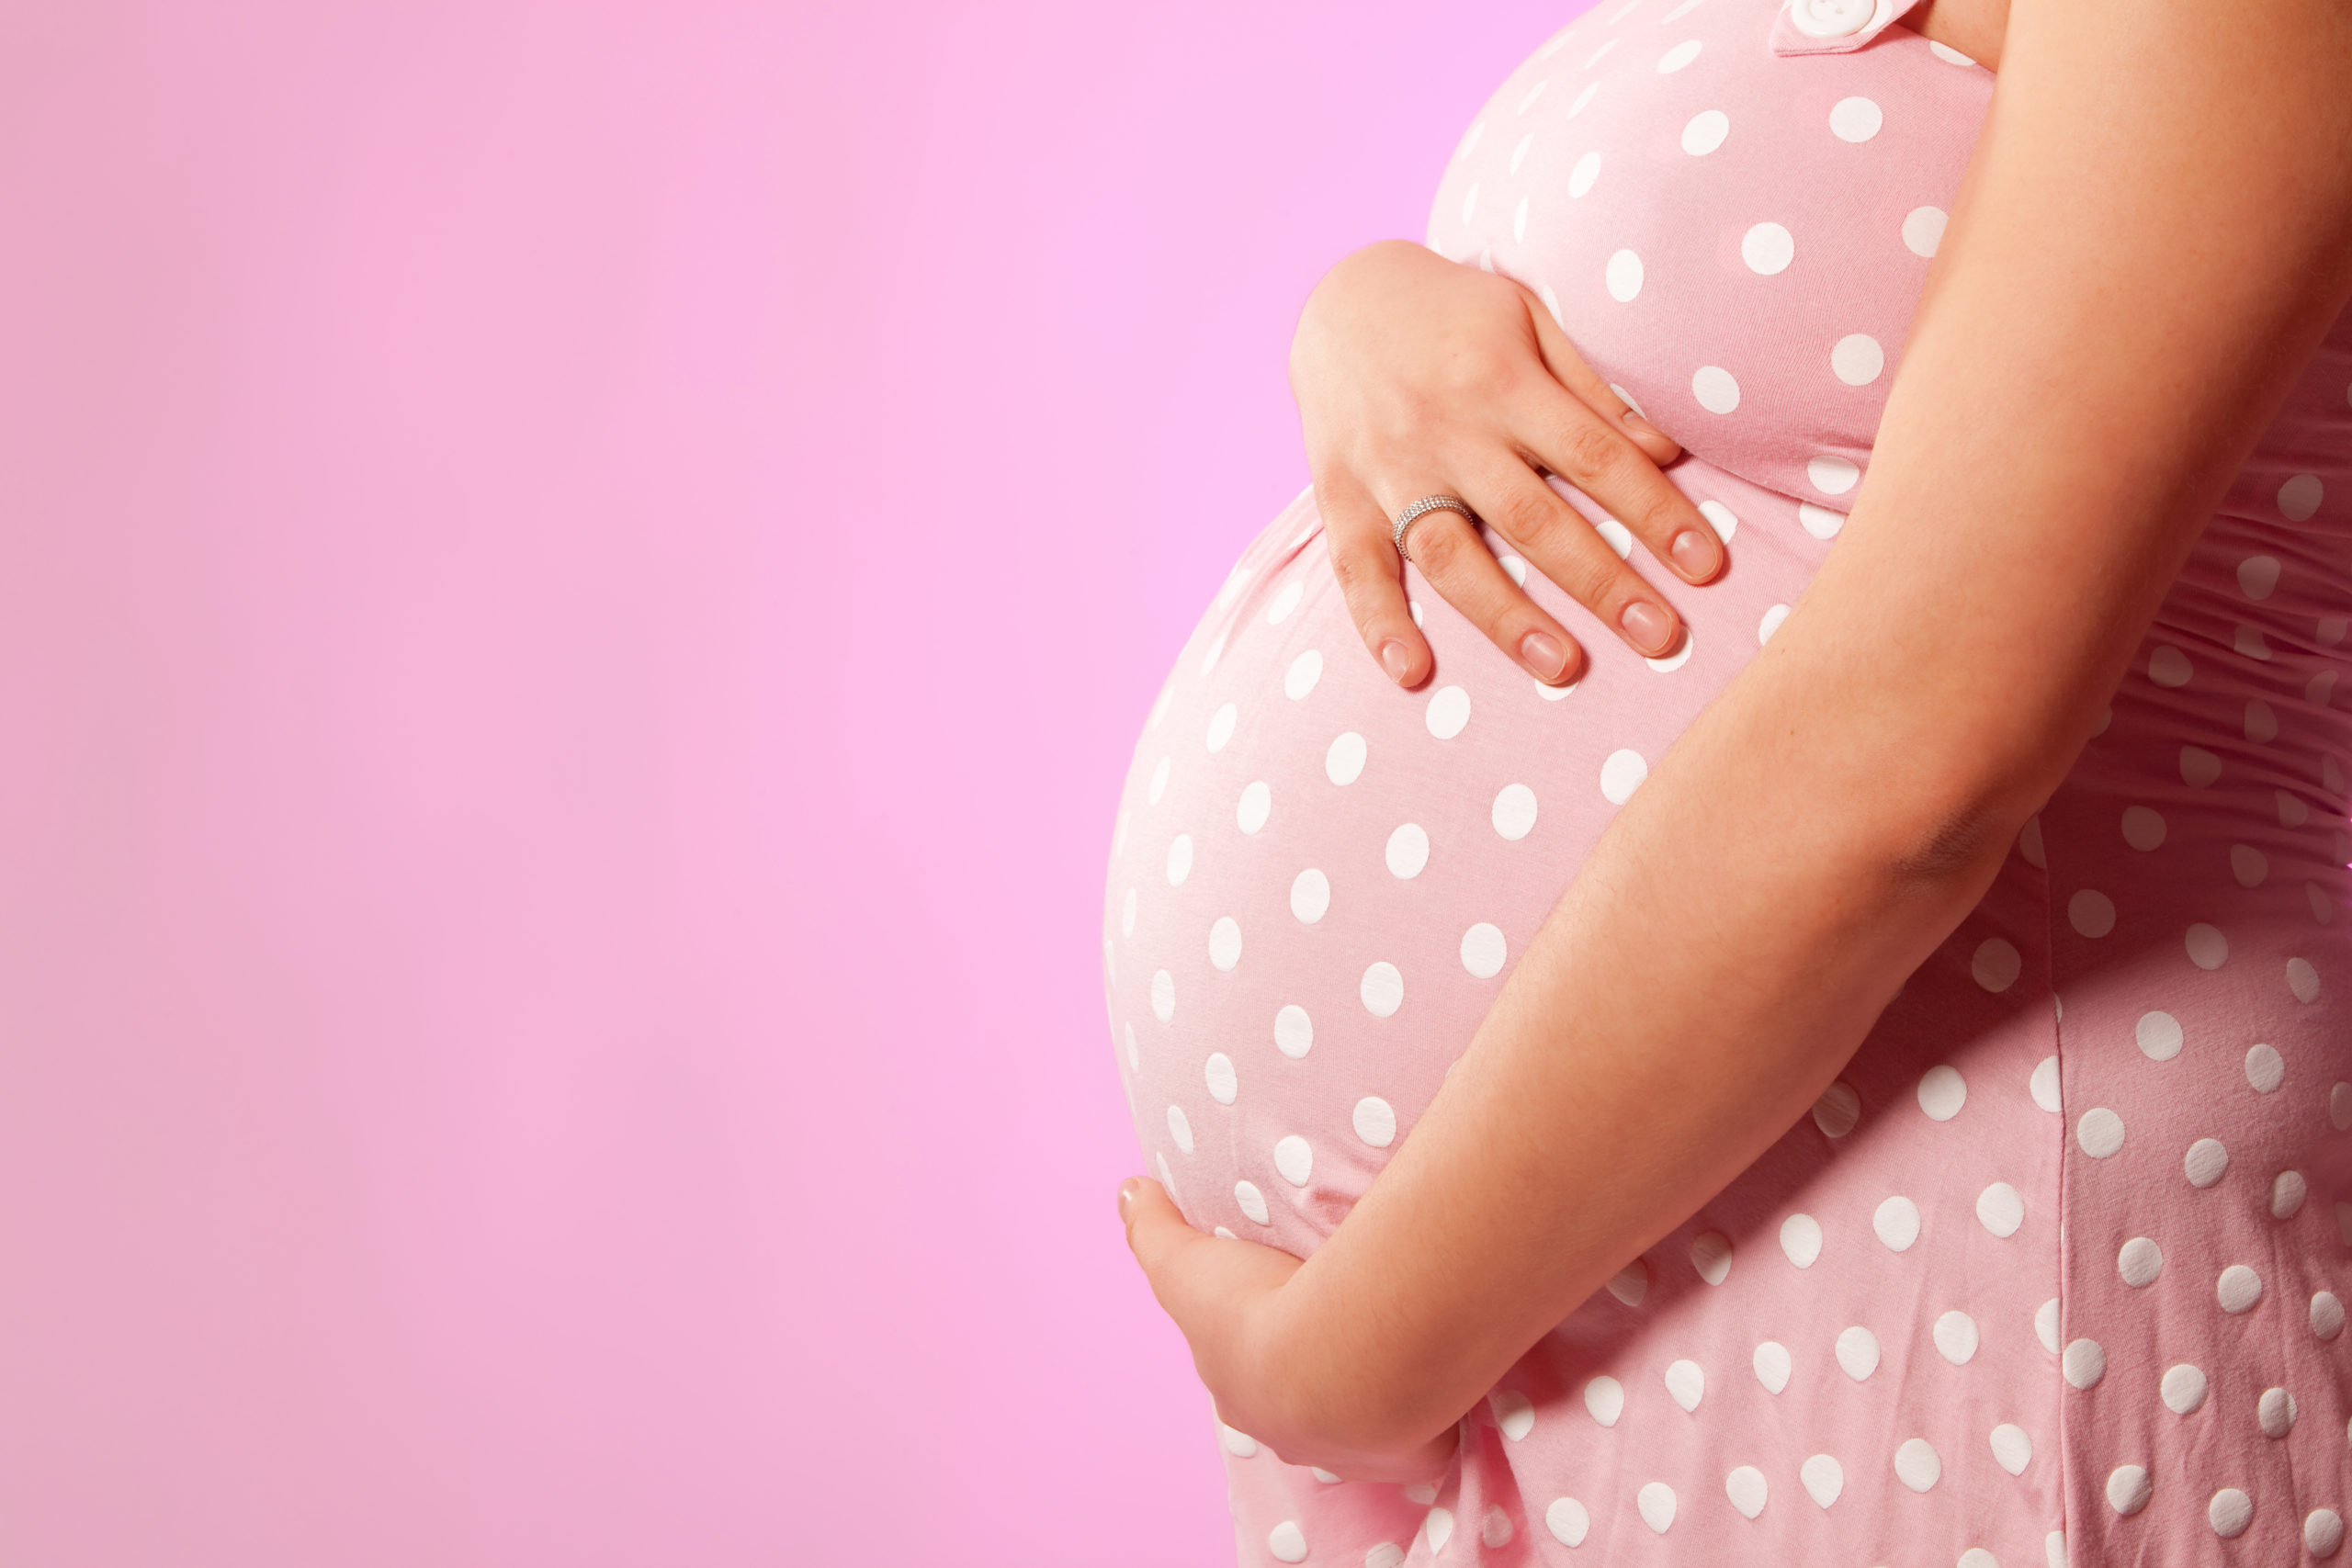 https://www.powerplasticsurgery.com/wp-content/uploads/2020/07/tummy-tuck-pregnancy-scaled.jpg